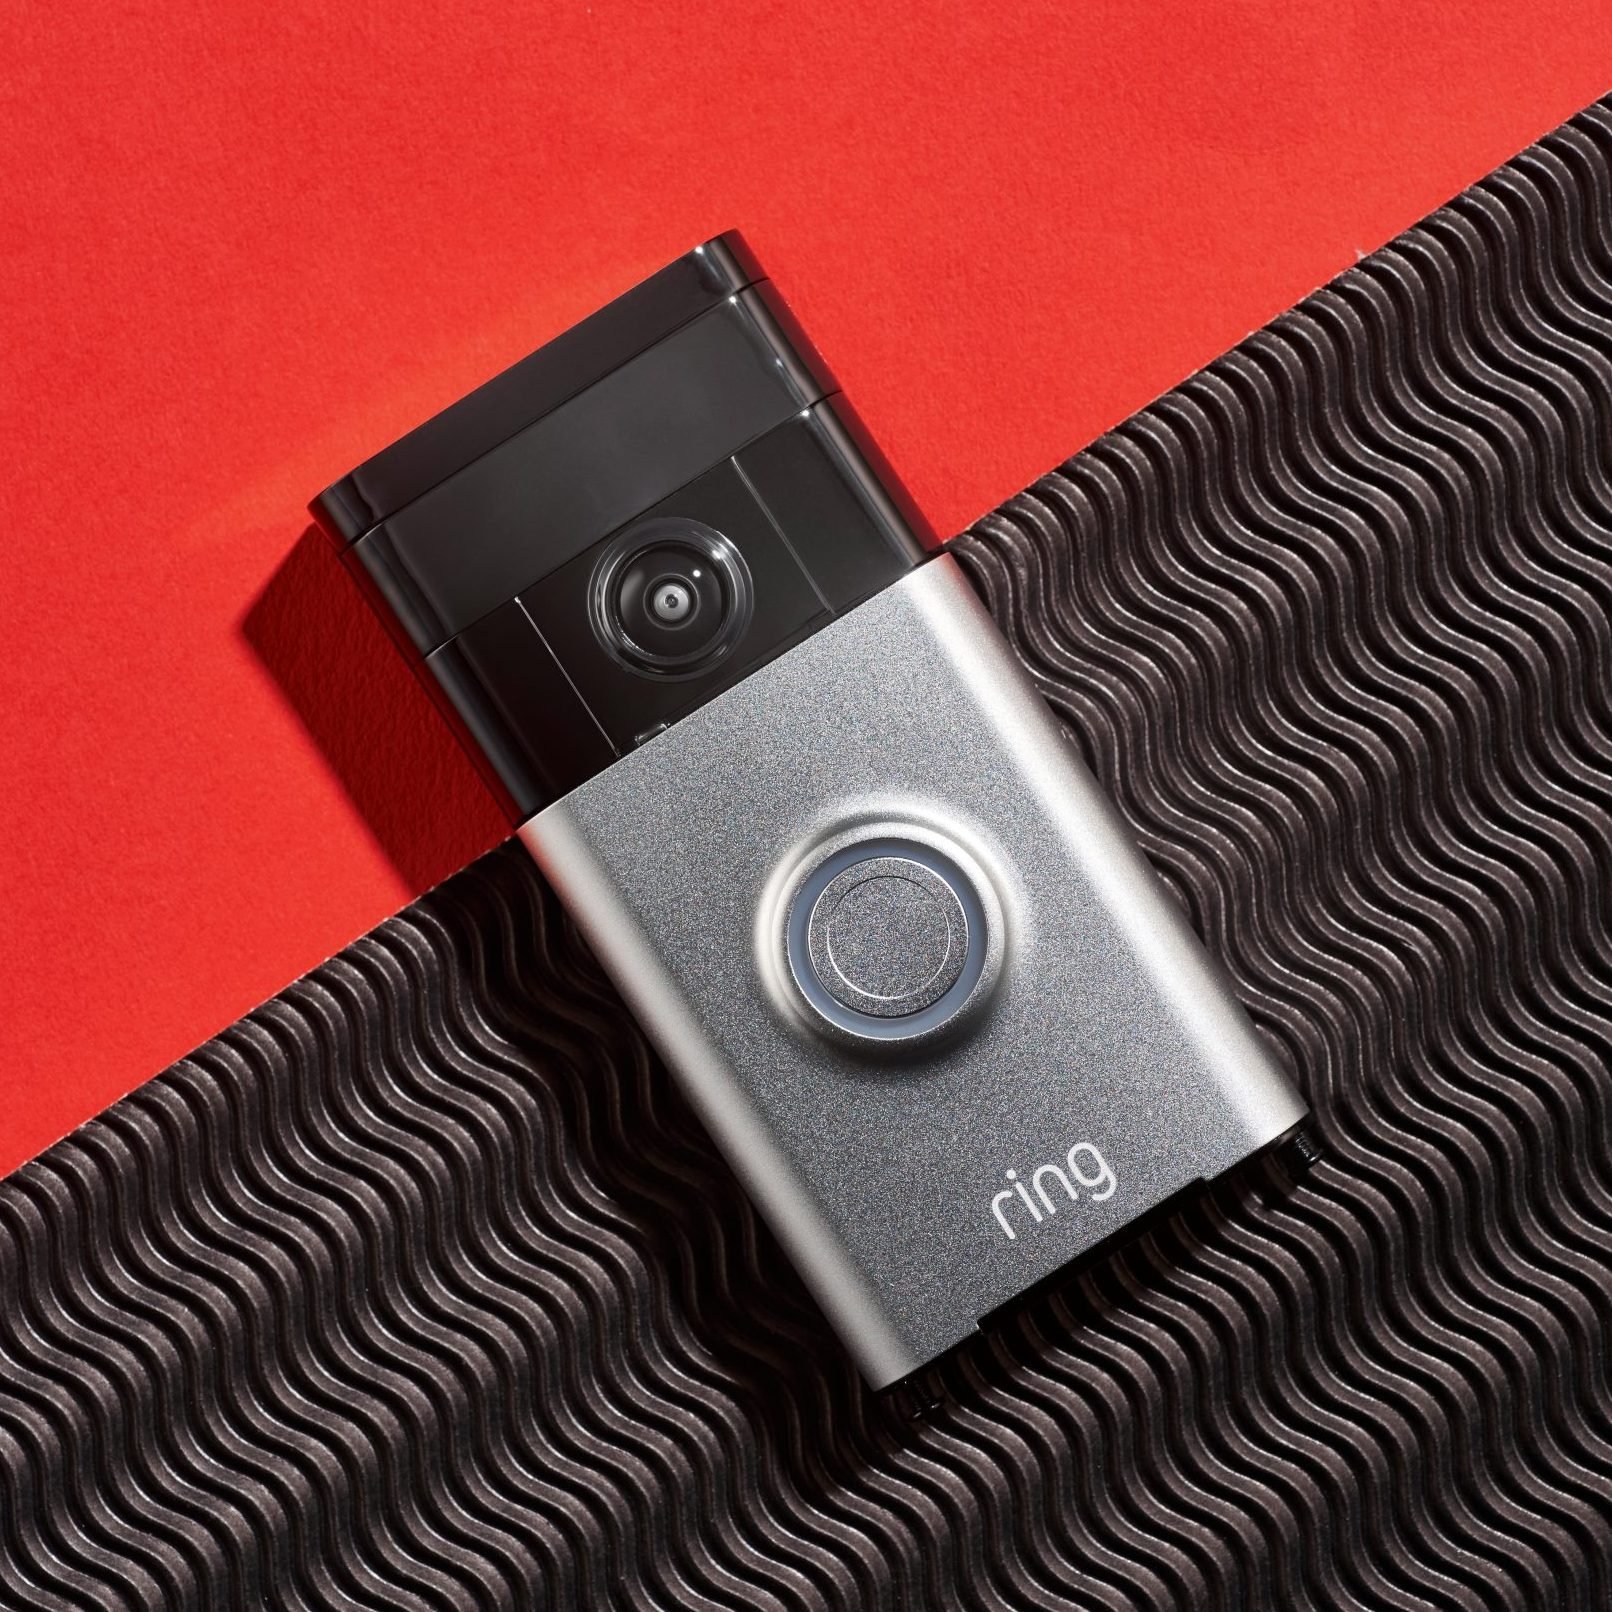 Installing a “Ring” doorbell/camera on your condo door